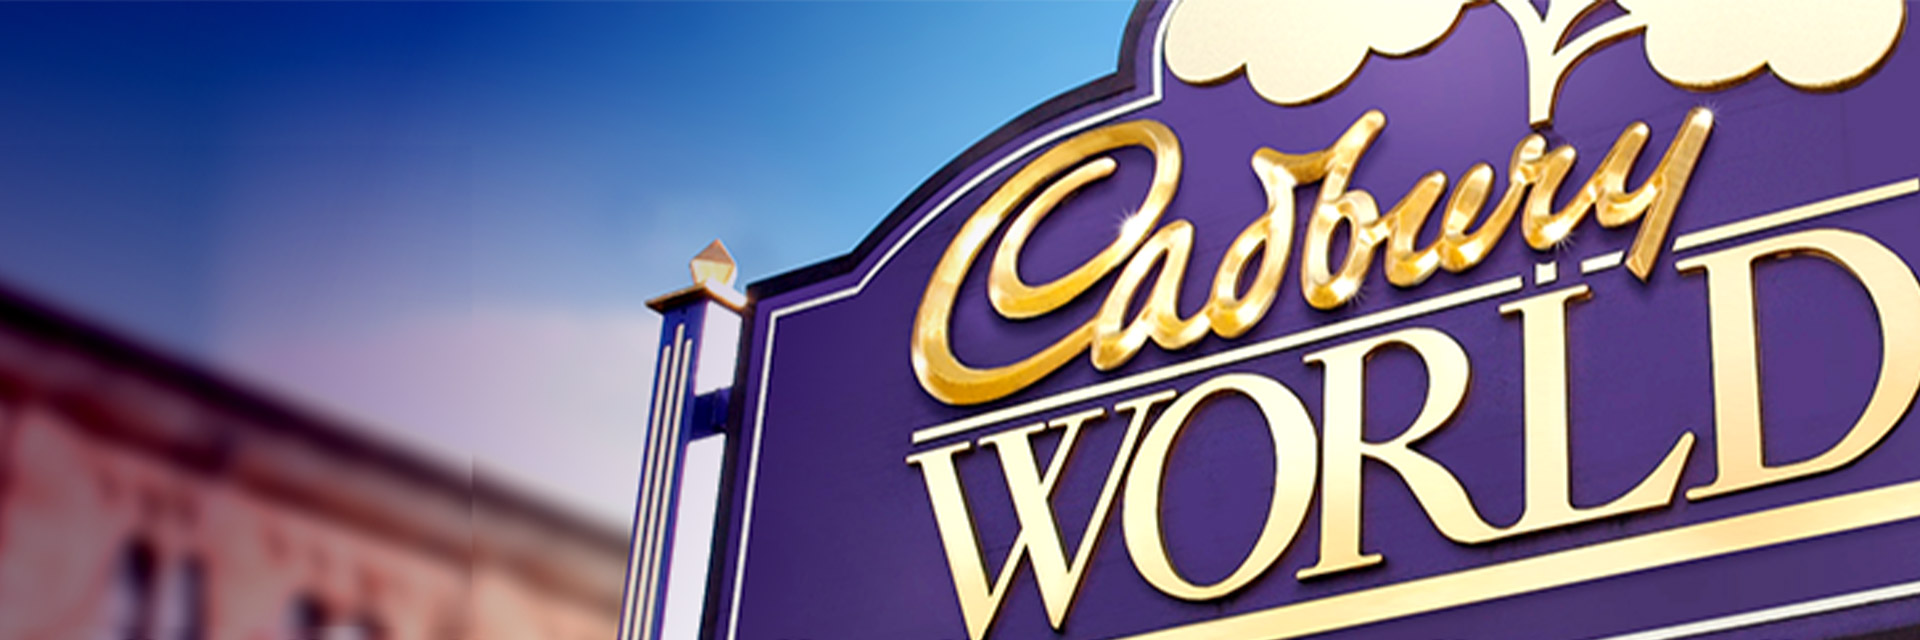 Cadbury World 3.1 Banner